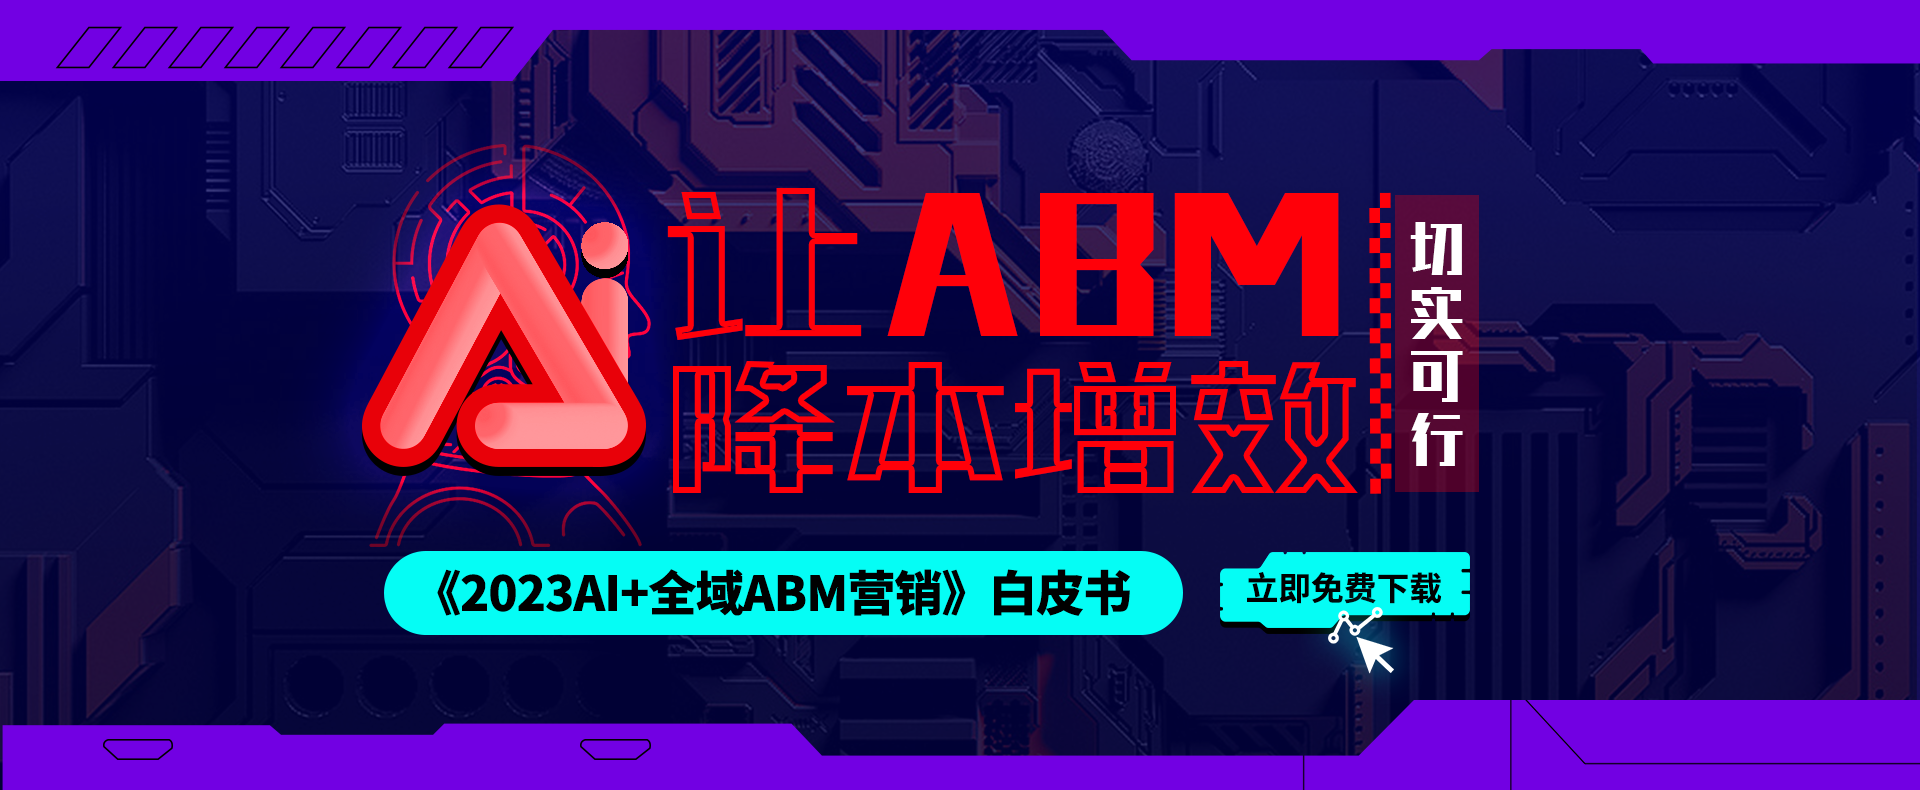 ABM营销_精准营销_ABM平台_ABM内容_ABM服务_ABM数据_大数据精准营销